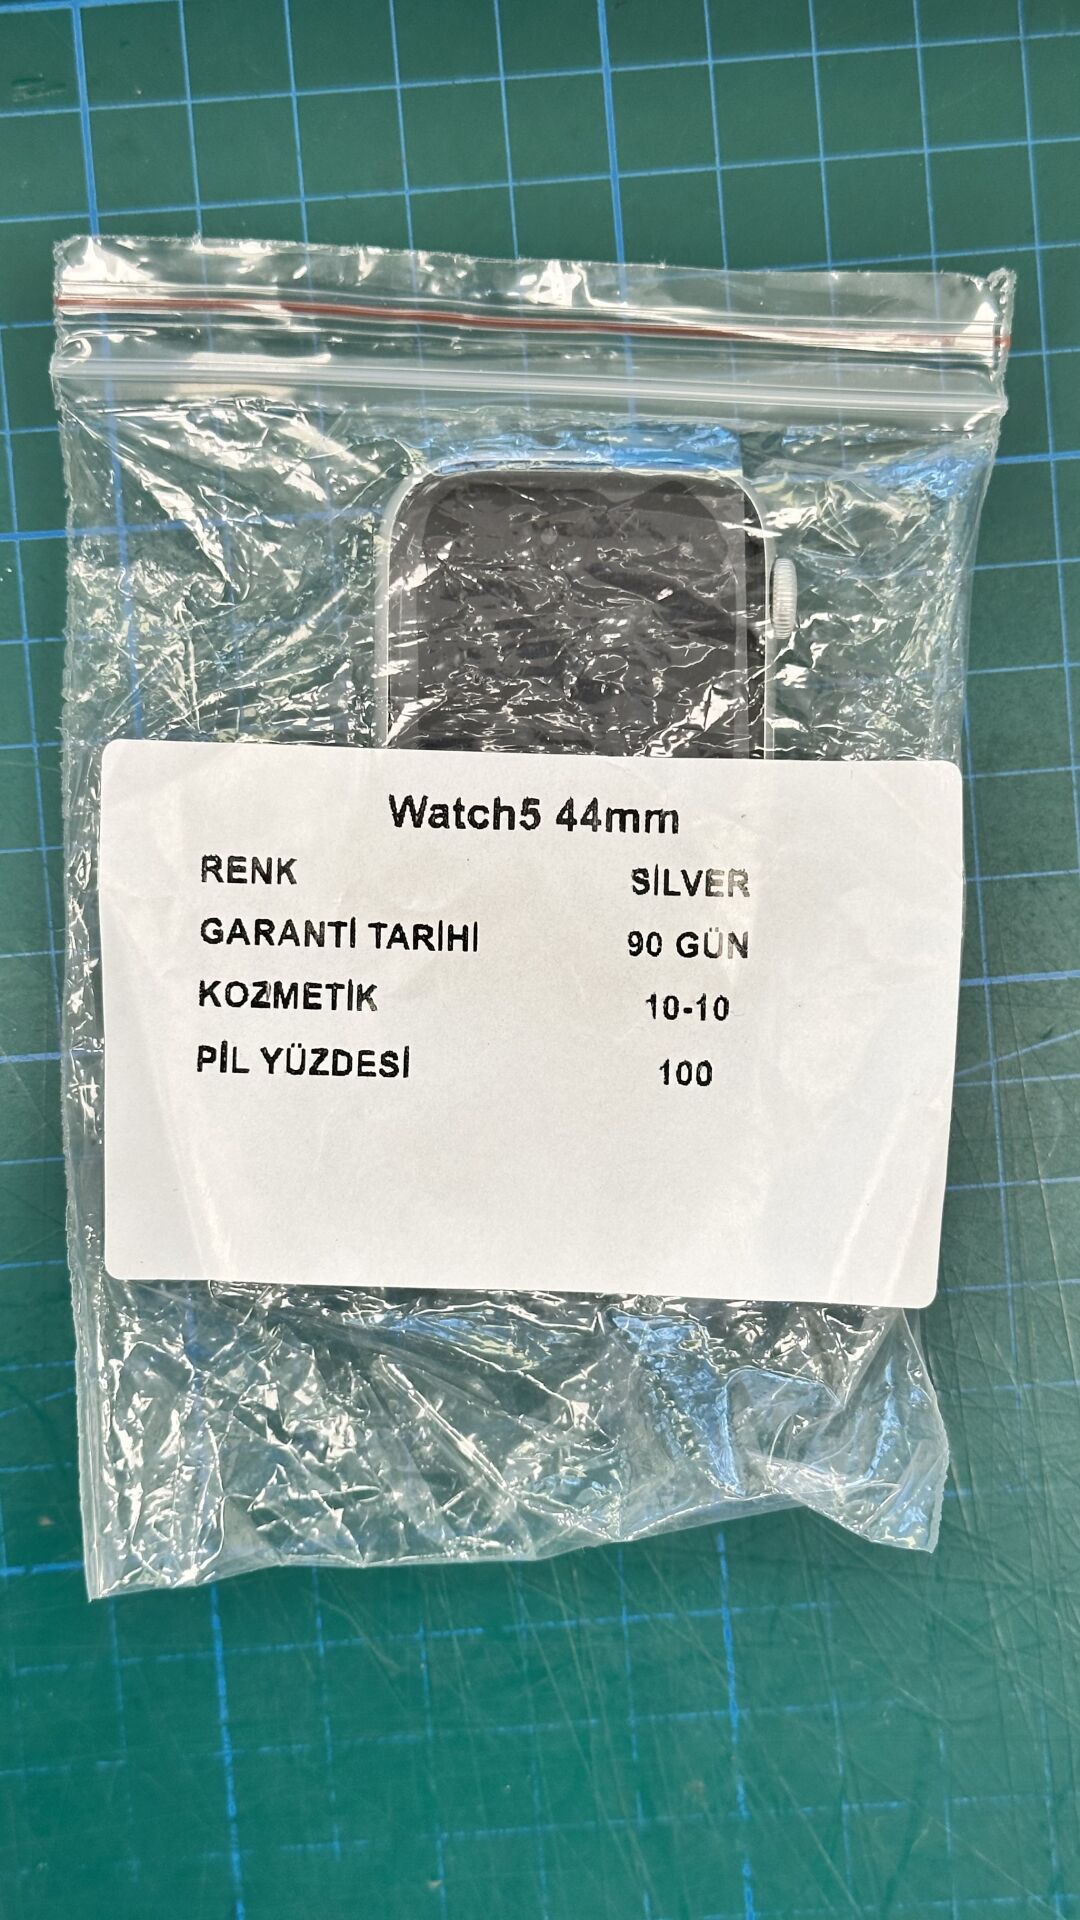 Watch 5 -44mm. Silver